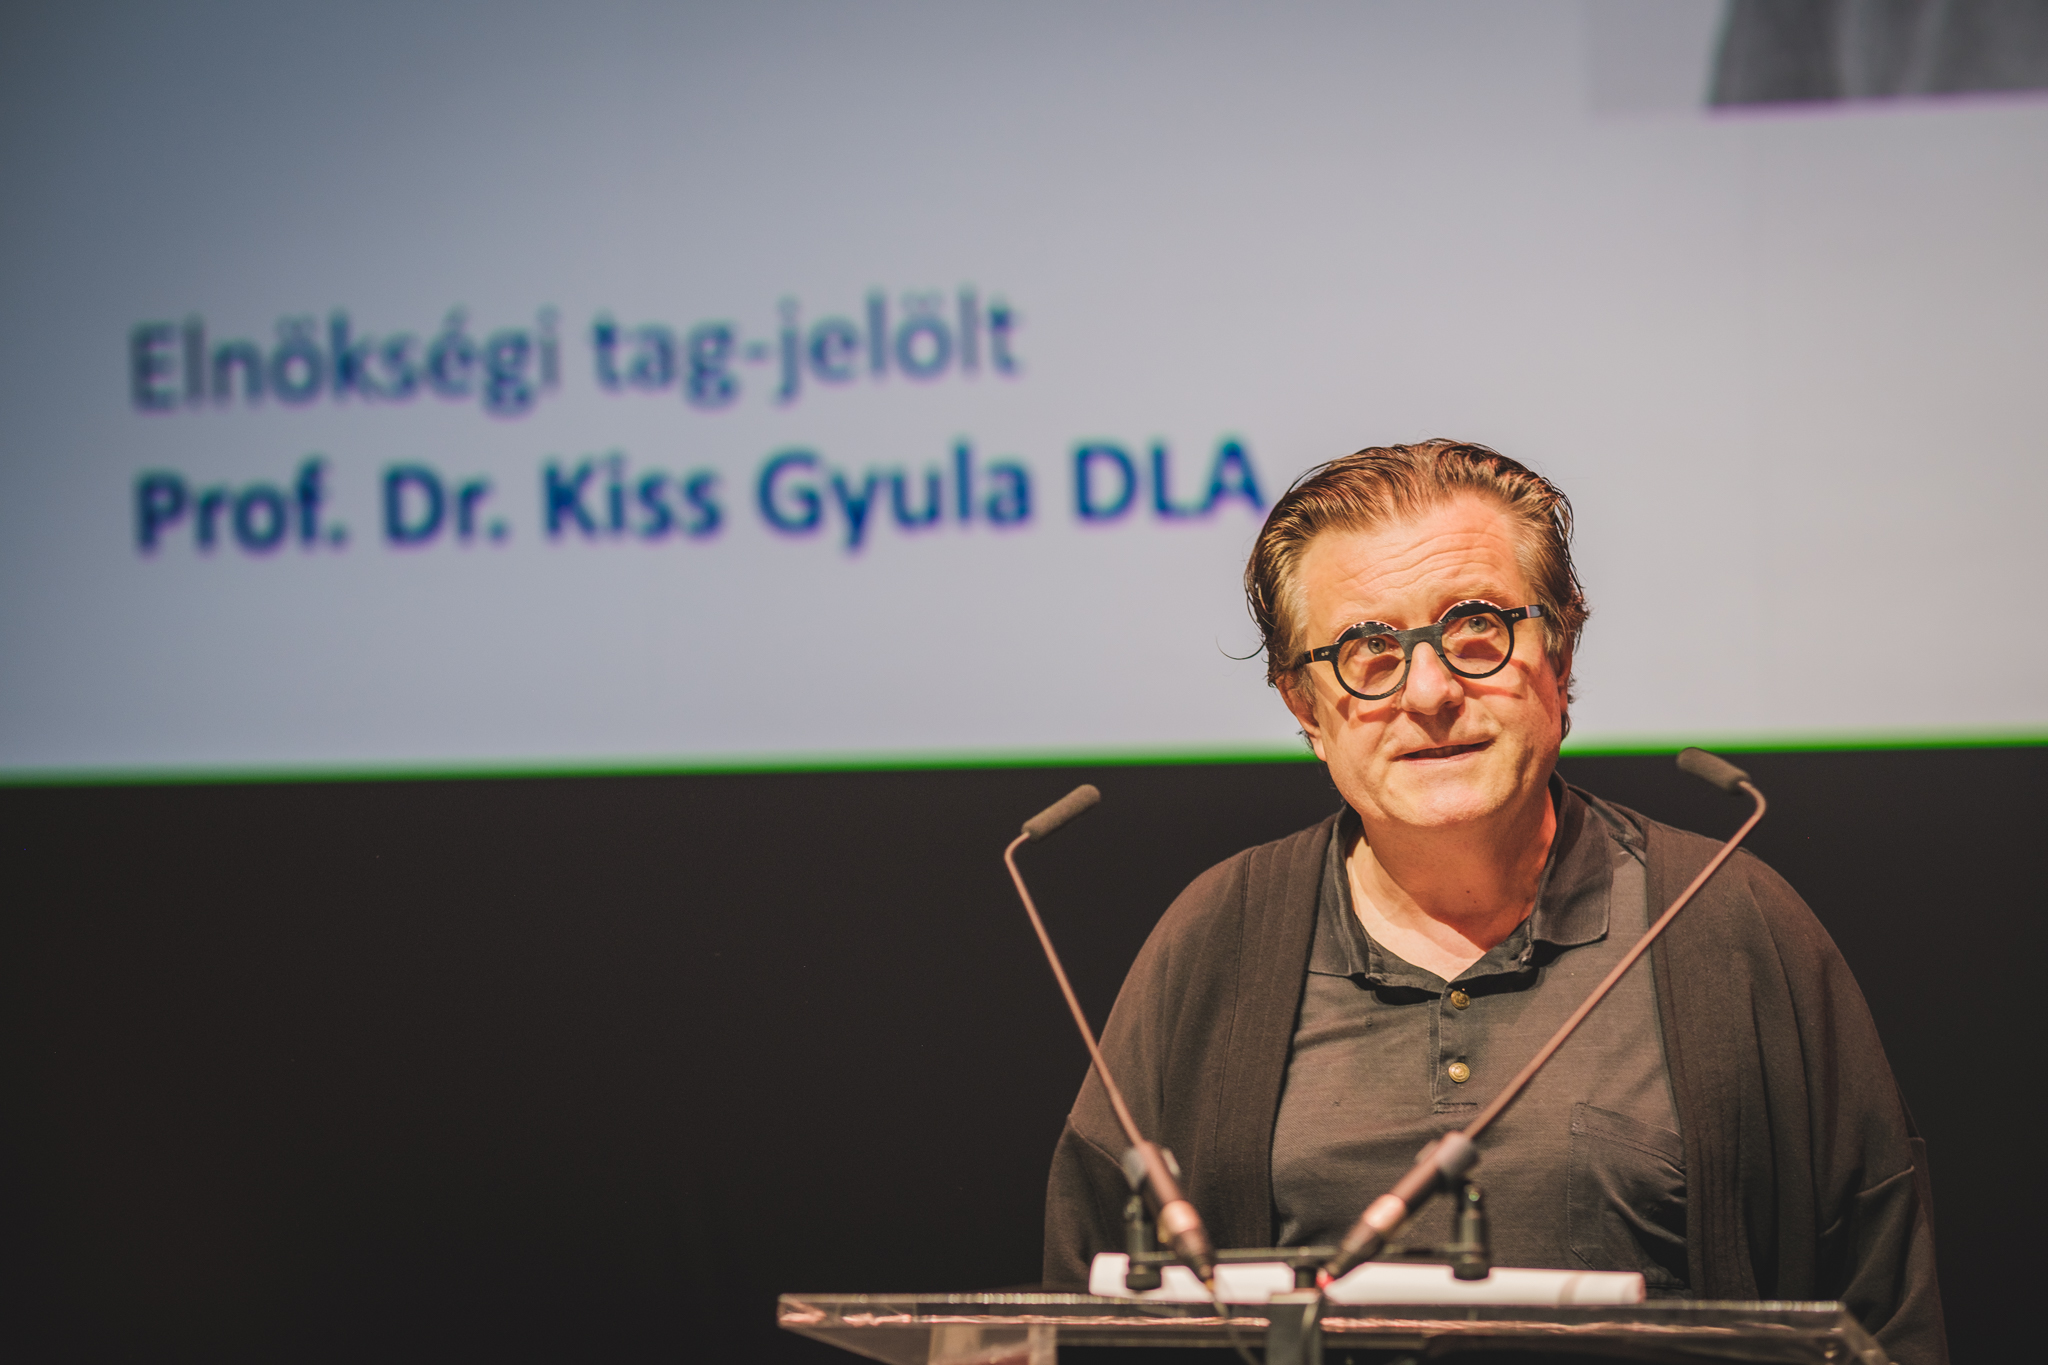 Prof. Kiss Gyula